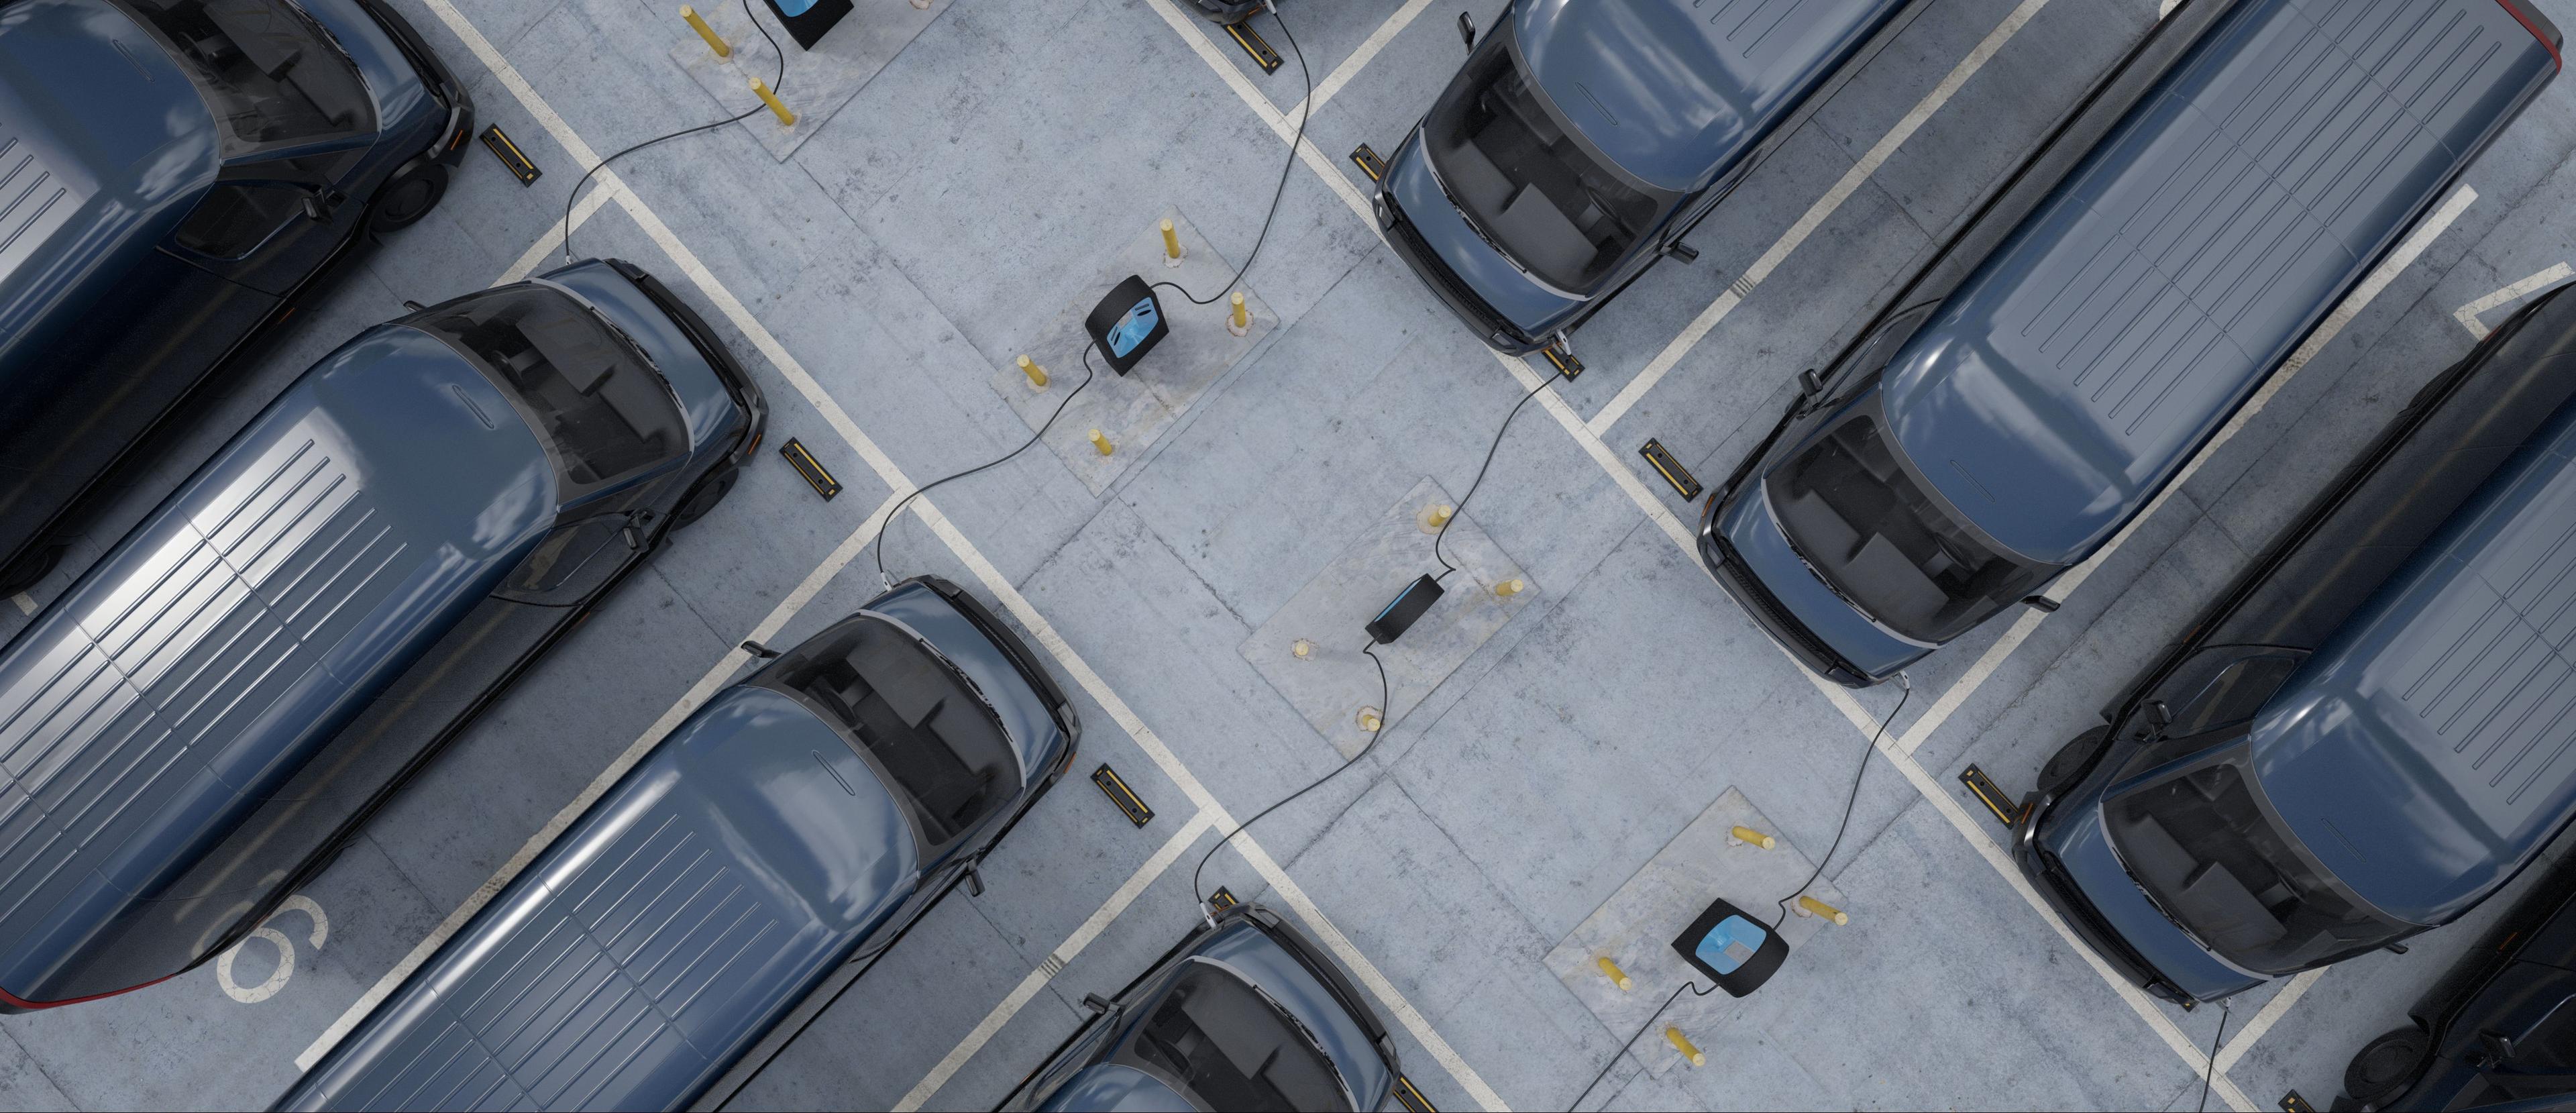 Aerial view of parked vans